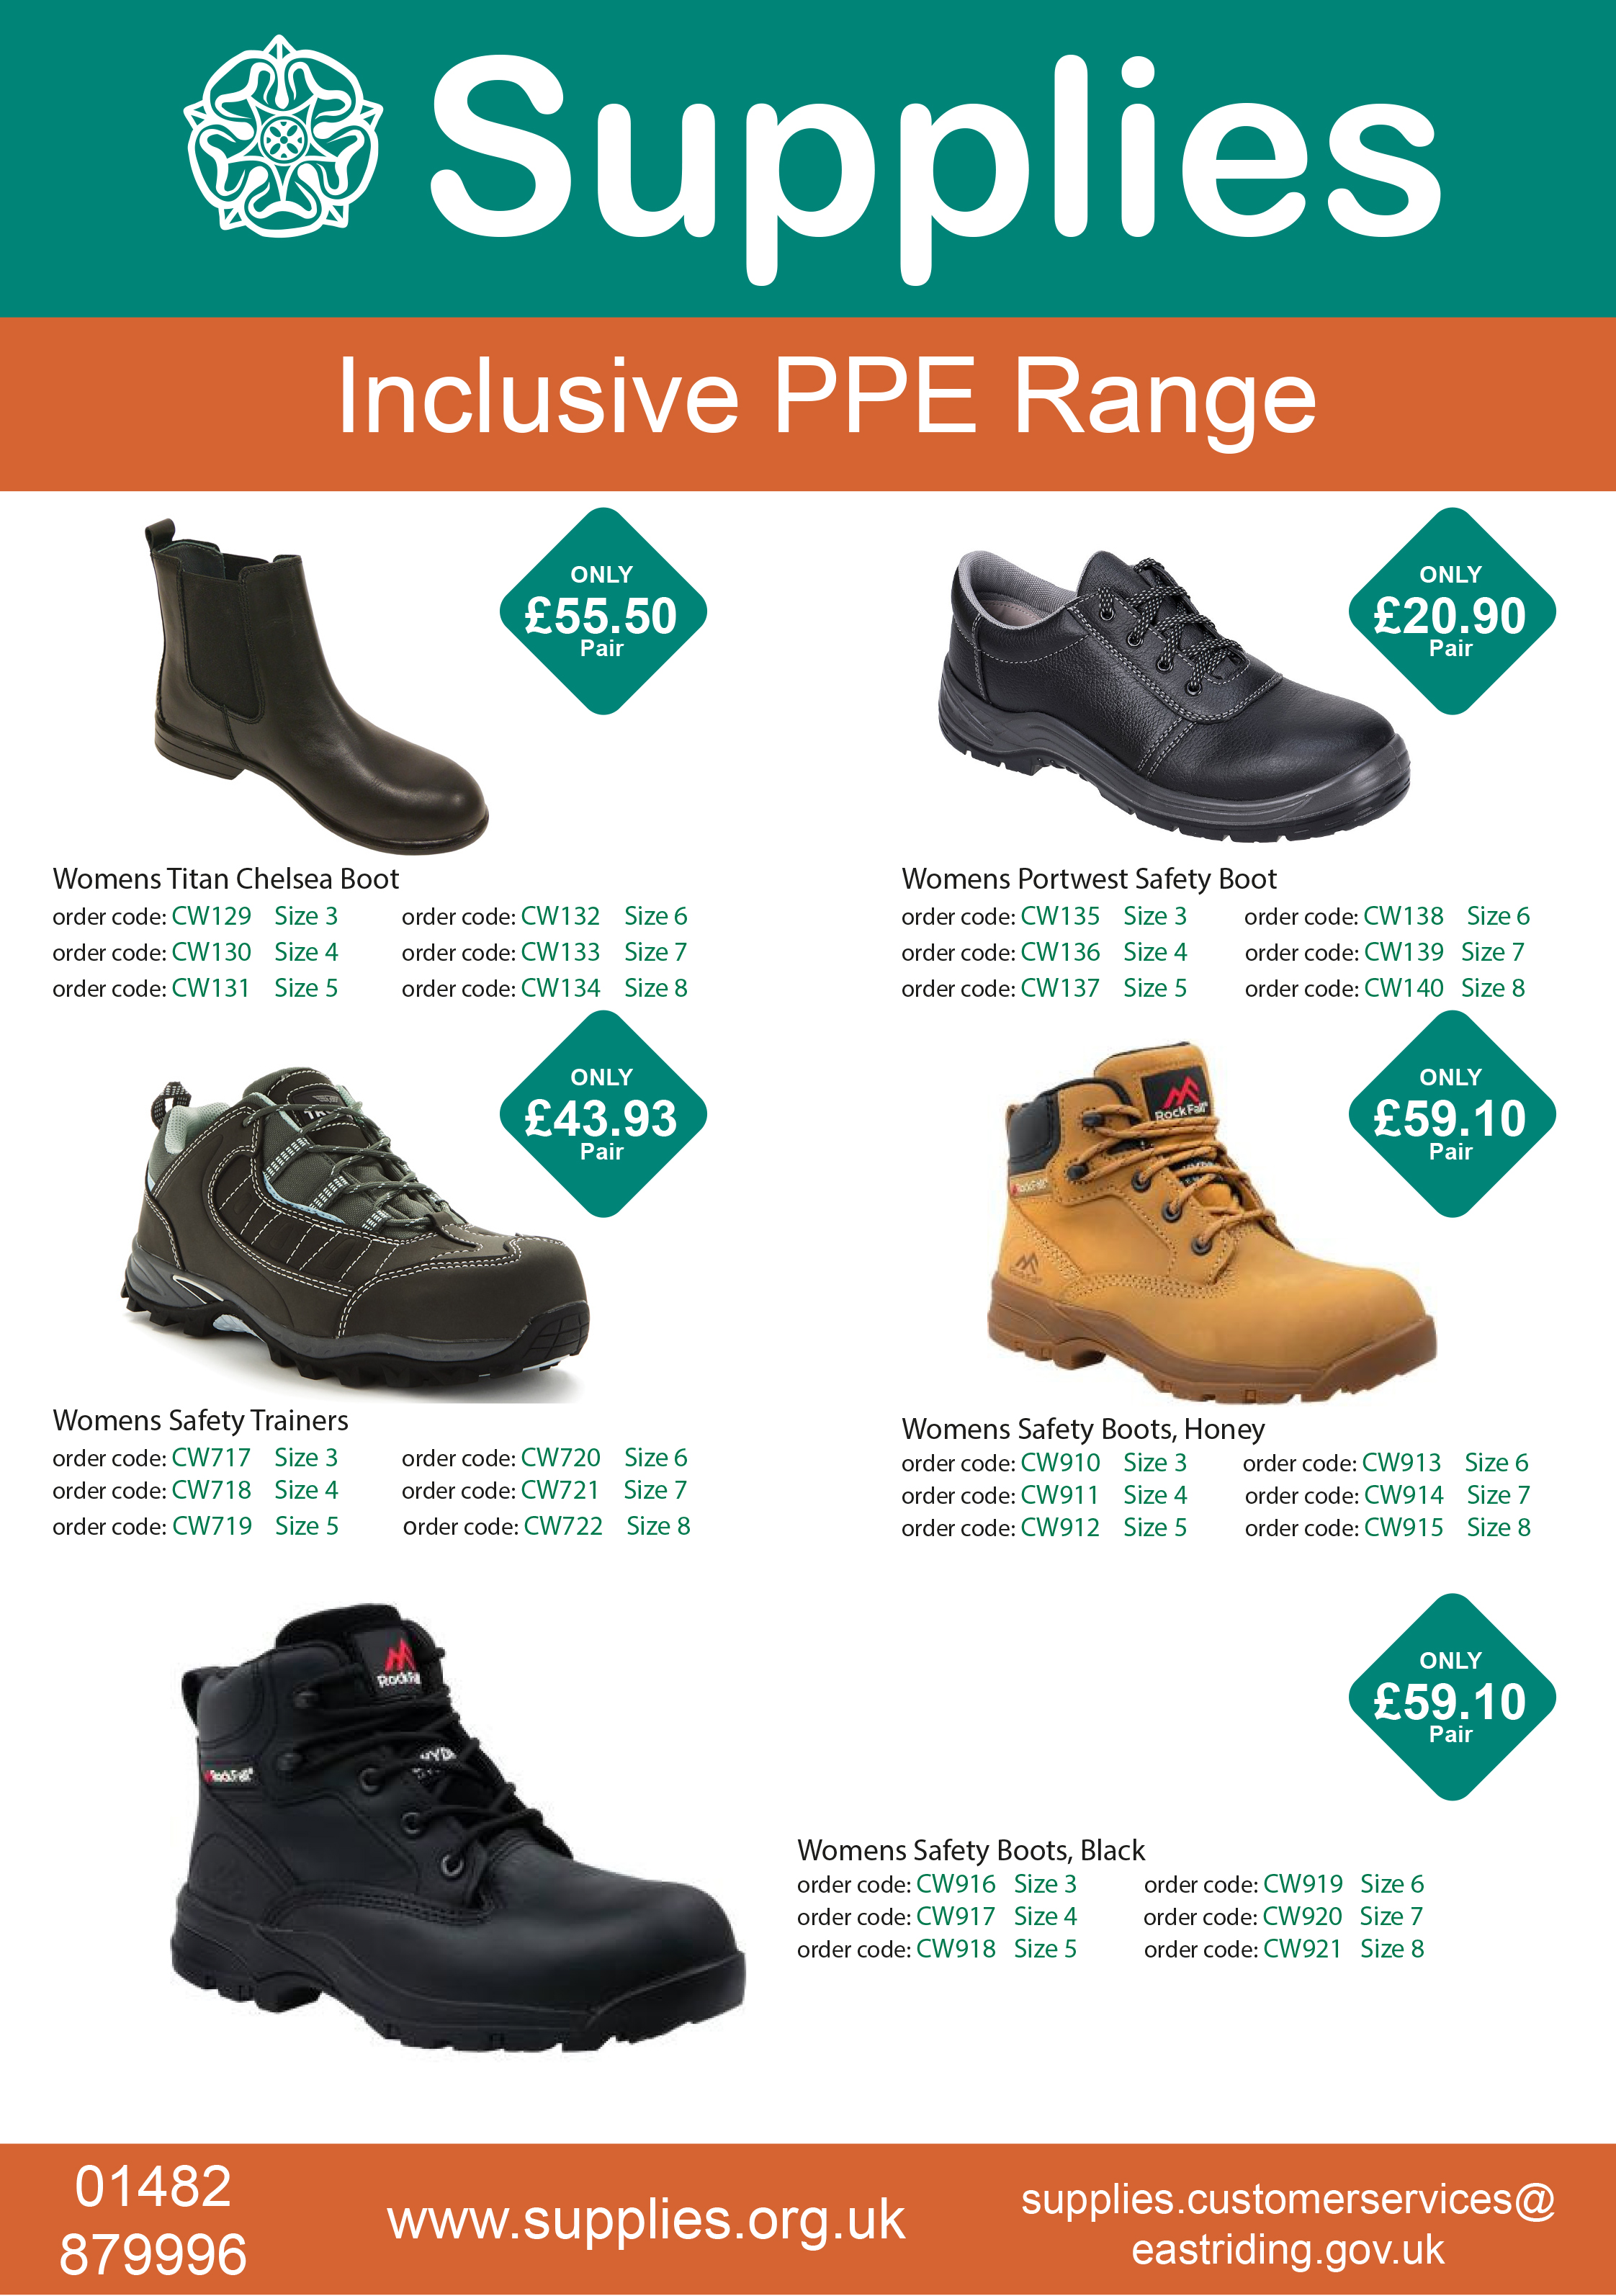 Inclusive PPE Range Flyer